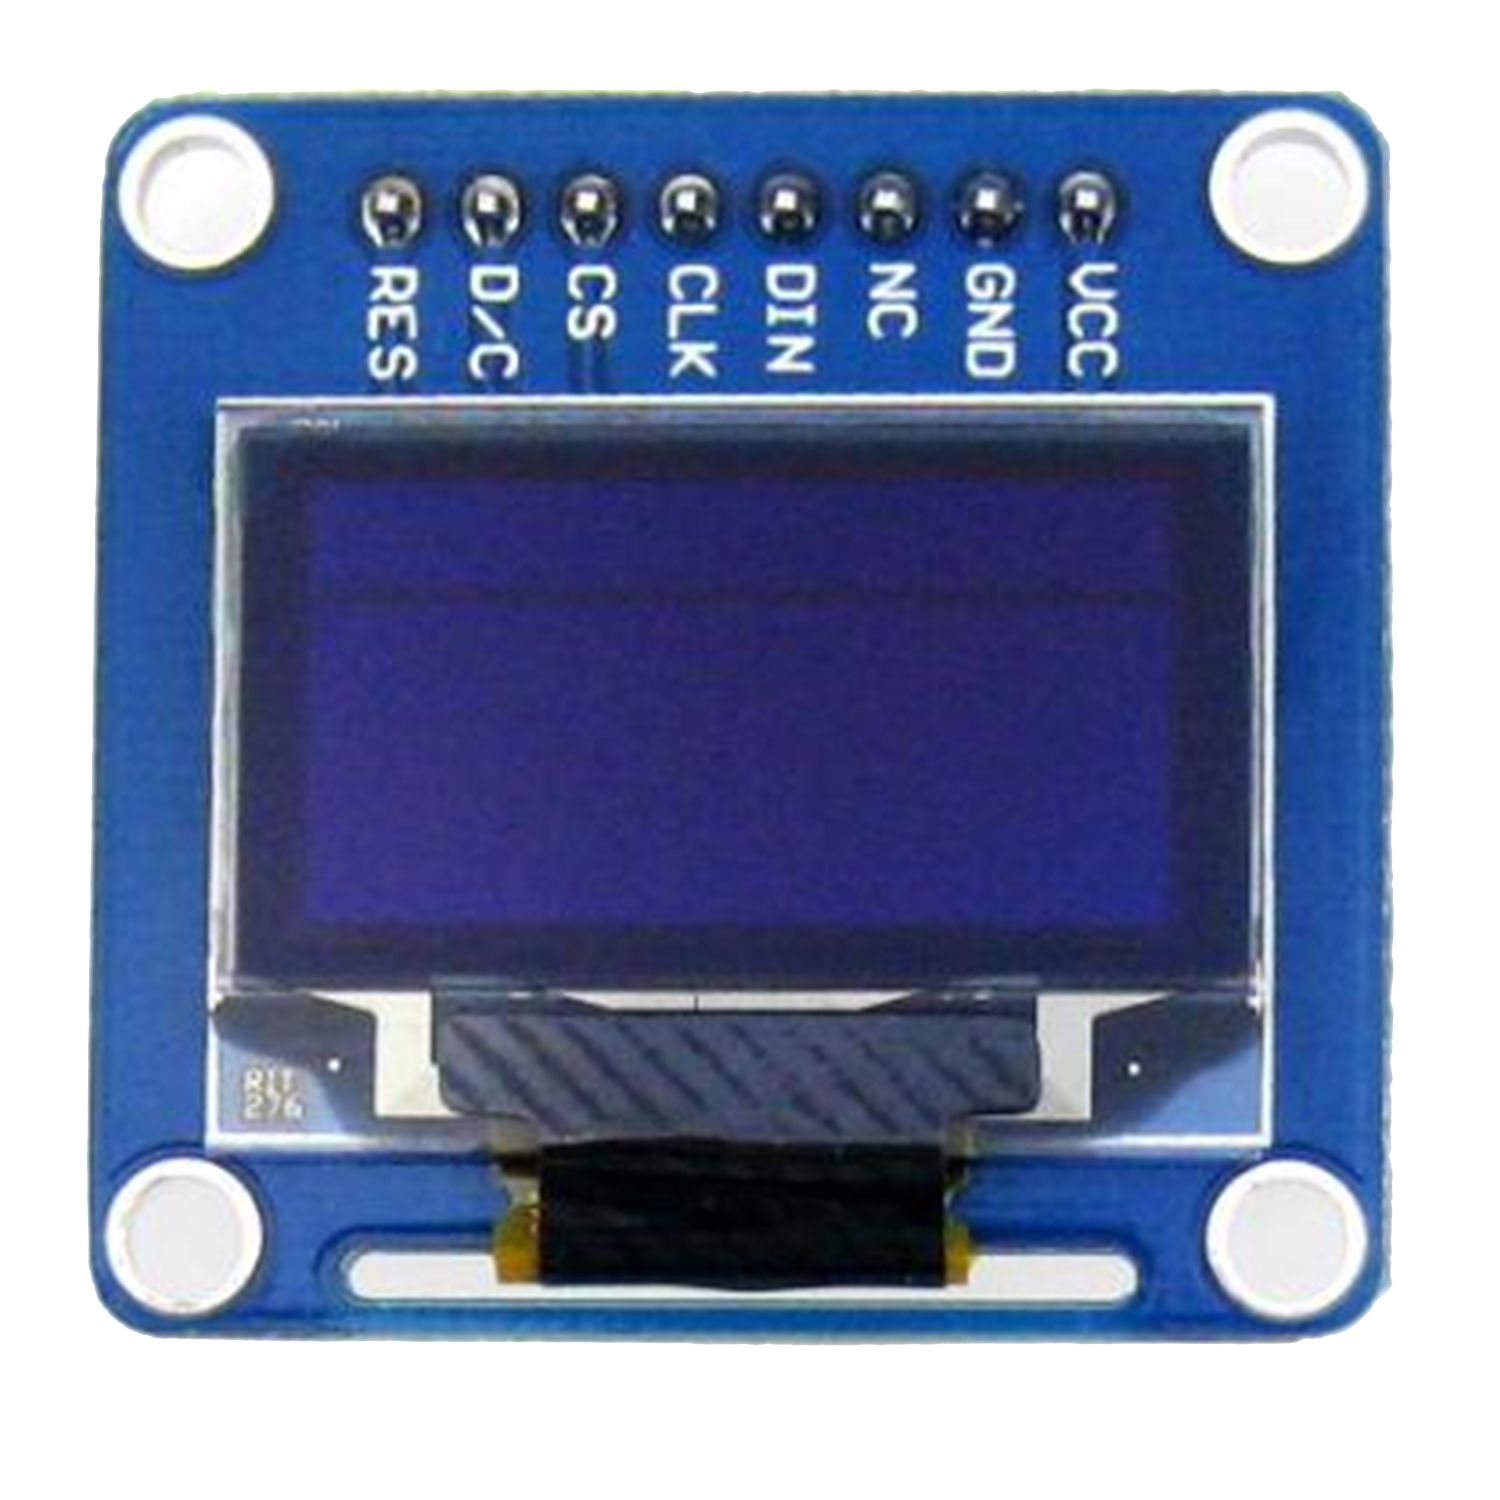 OLED дисплей 0.96 "I2C / SPI інтерфейси 128x64 (жовто-синій) від Waveshare